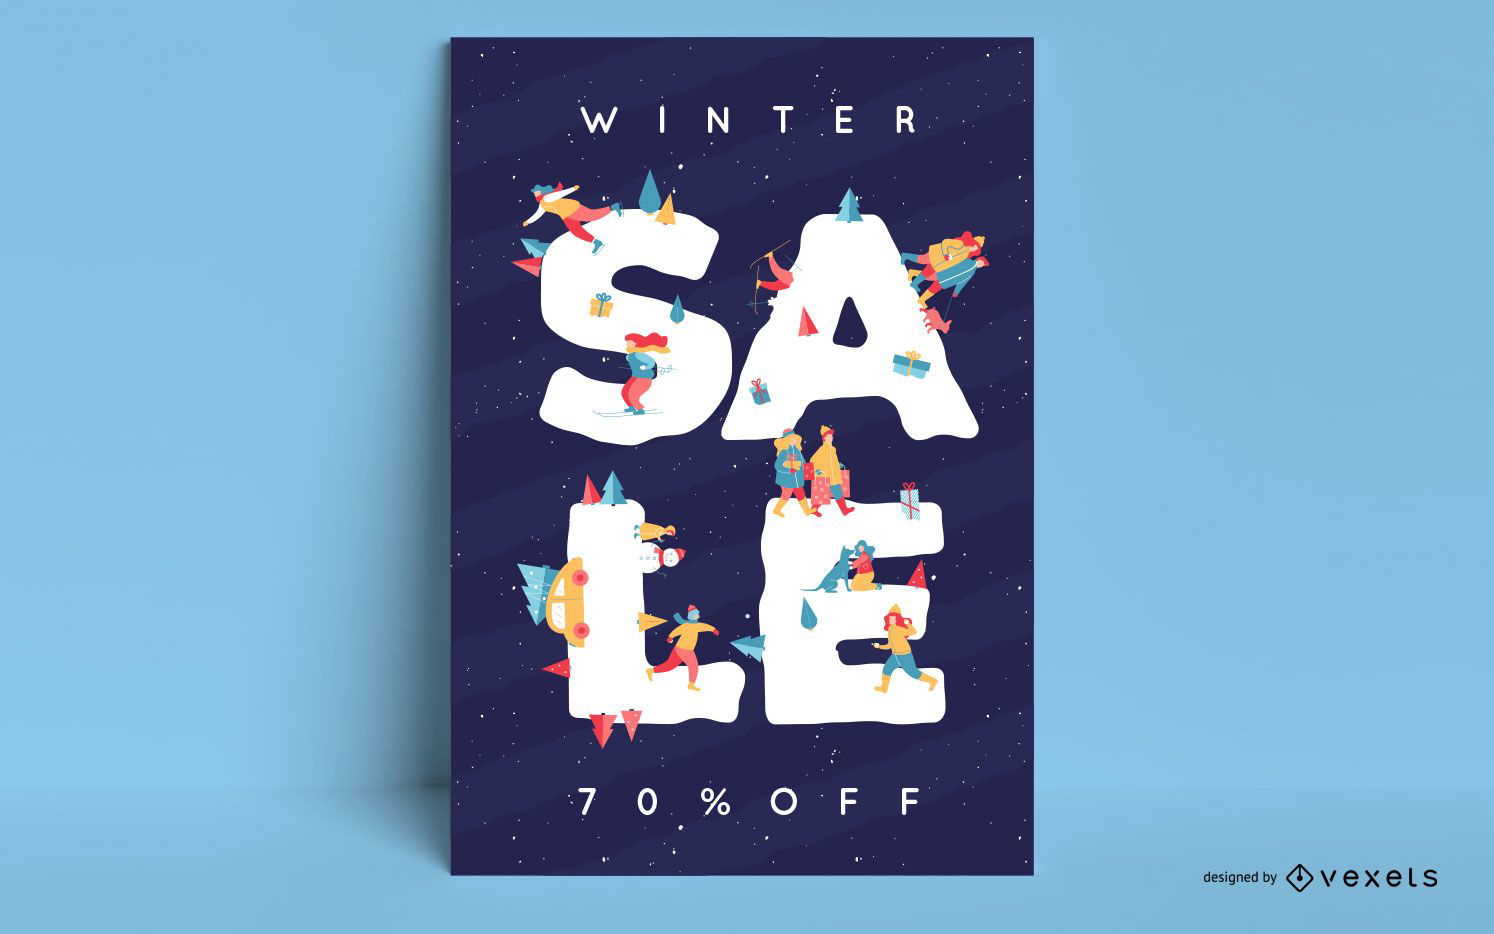 Winter sale editable poster